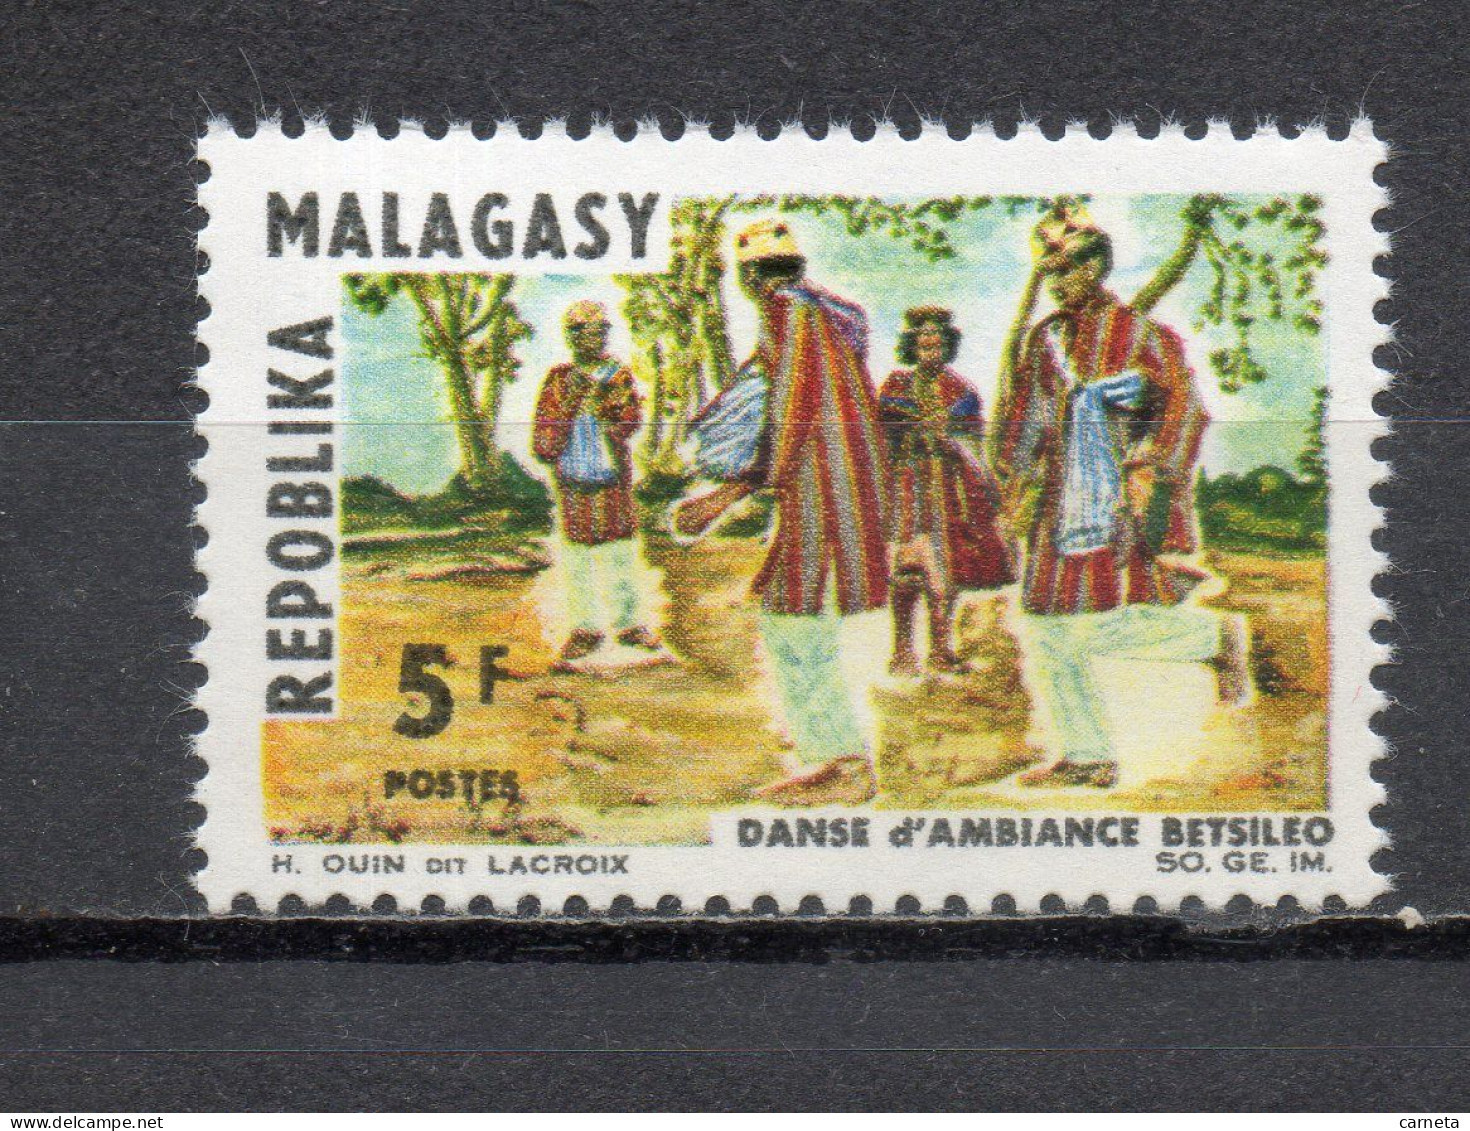 MADAGASCAR   N° 423  NEUF SANS CHARNIERE  COTE 0.50€  DANSE - Madagascar (1960-...)